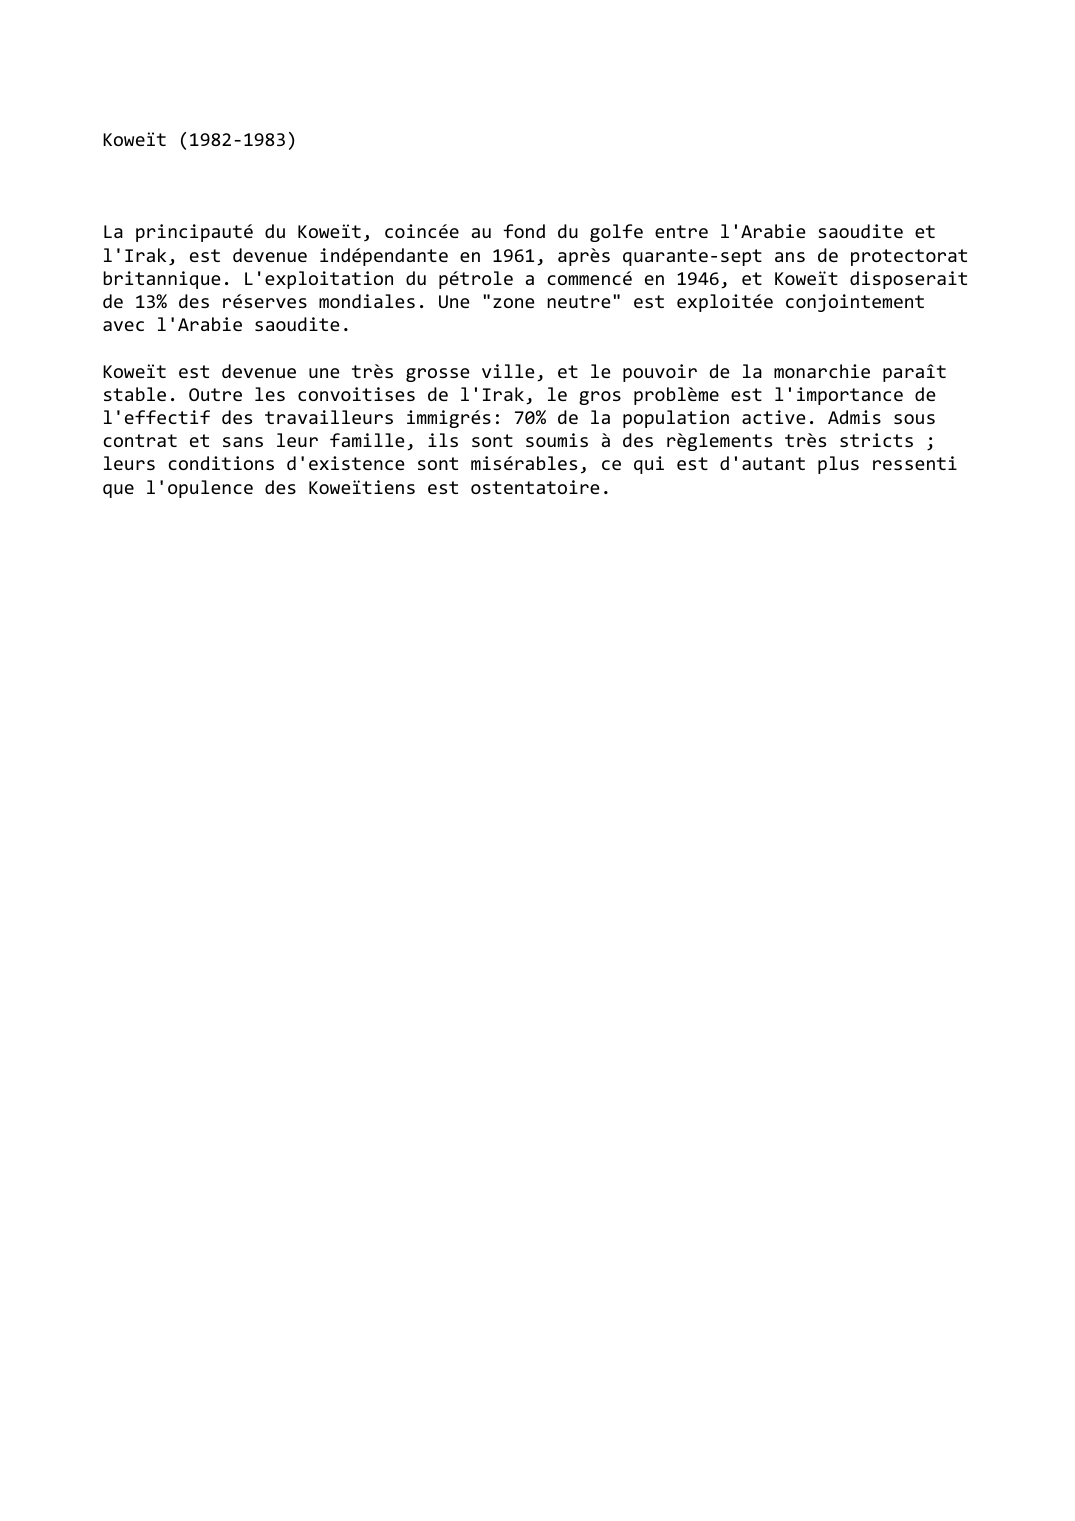 Prévisualisation du document Koweït (1982-1983)